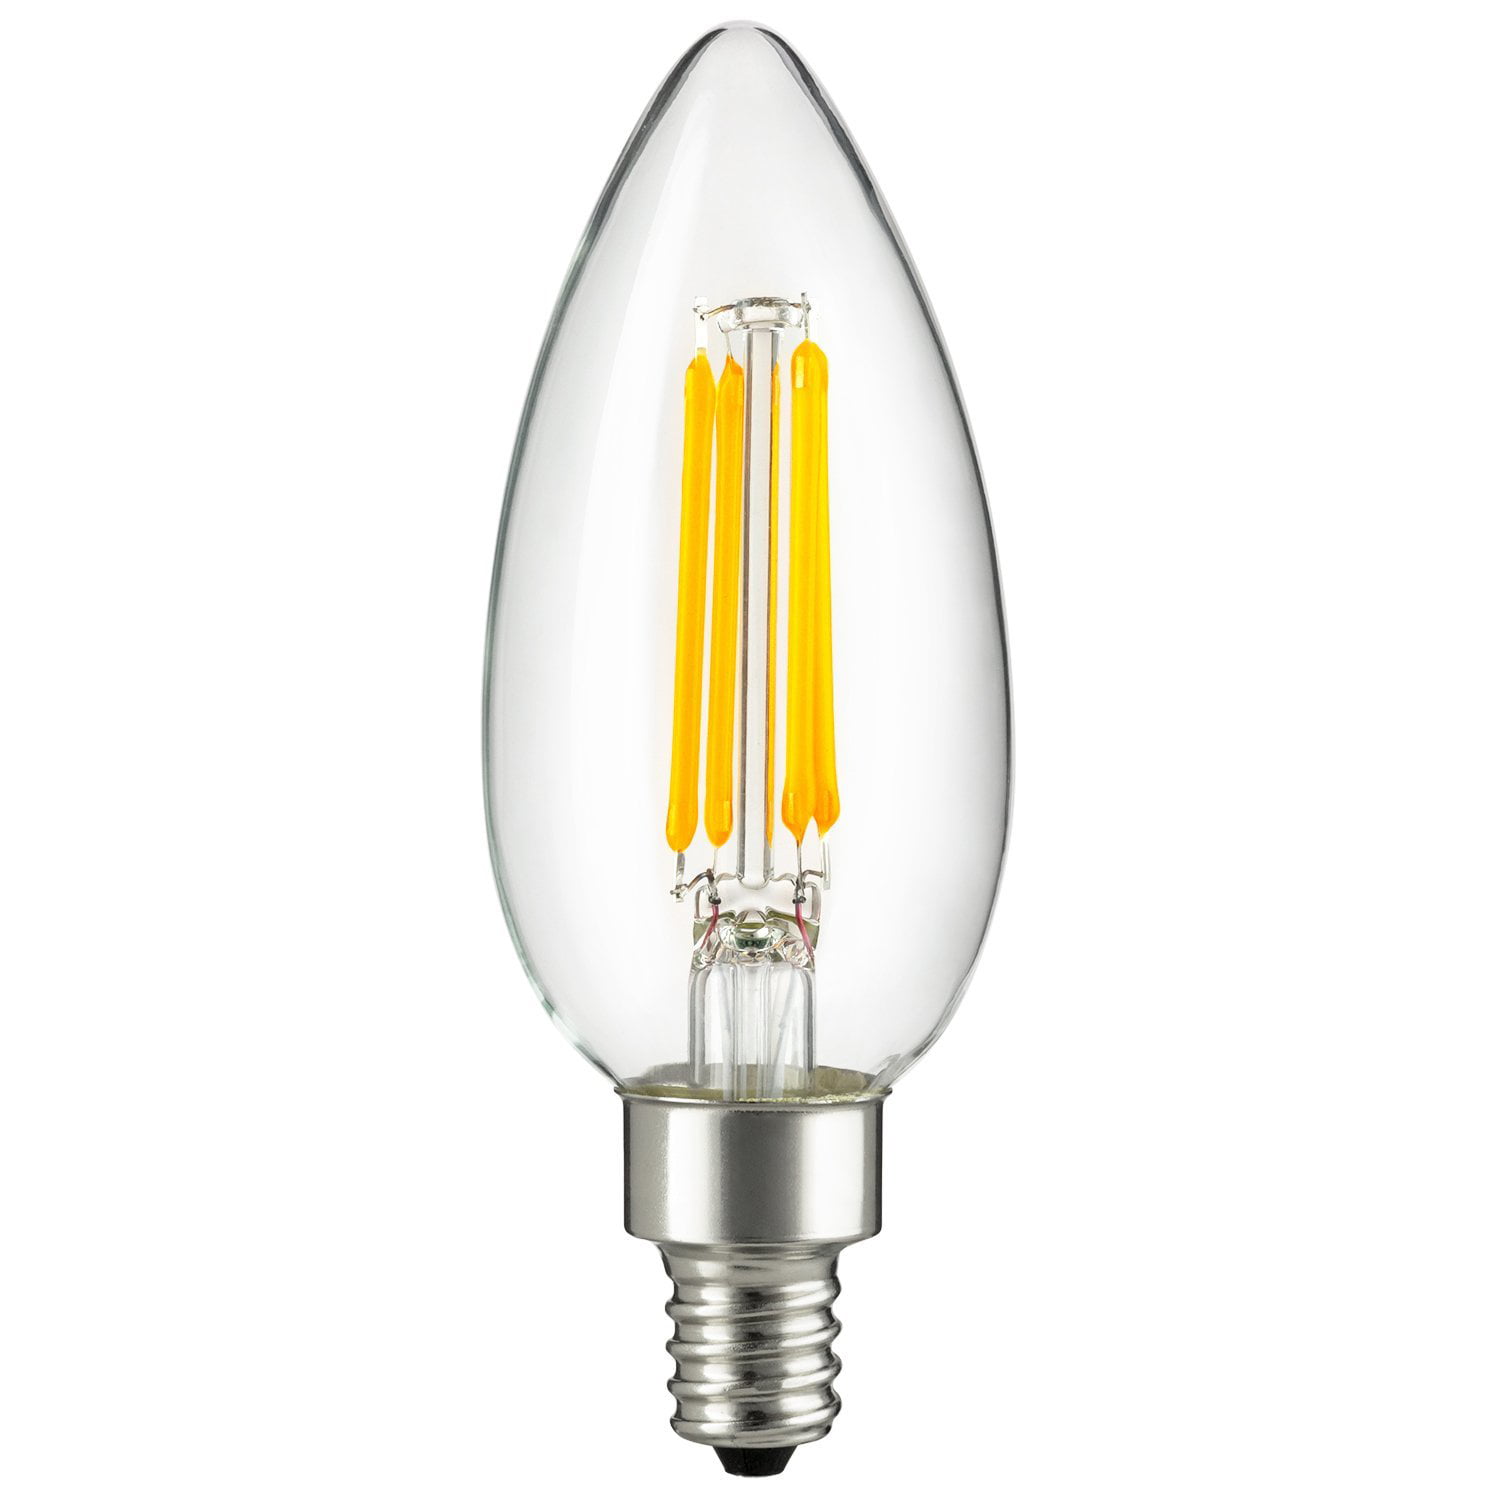 Sylvania Home Lighting 74591 Sylvania Filament LED Bulb Clear Finish